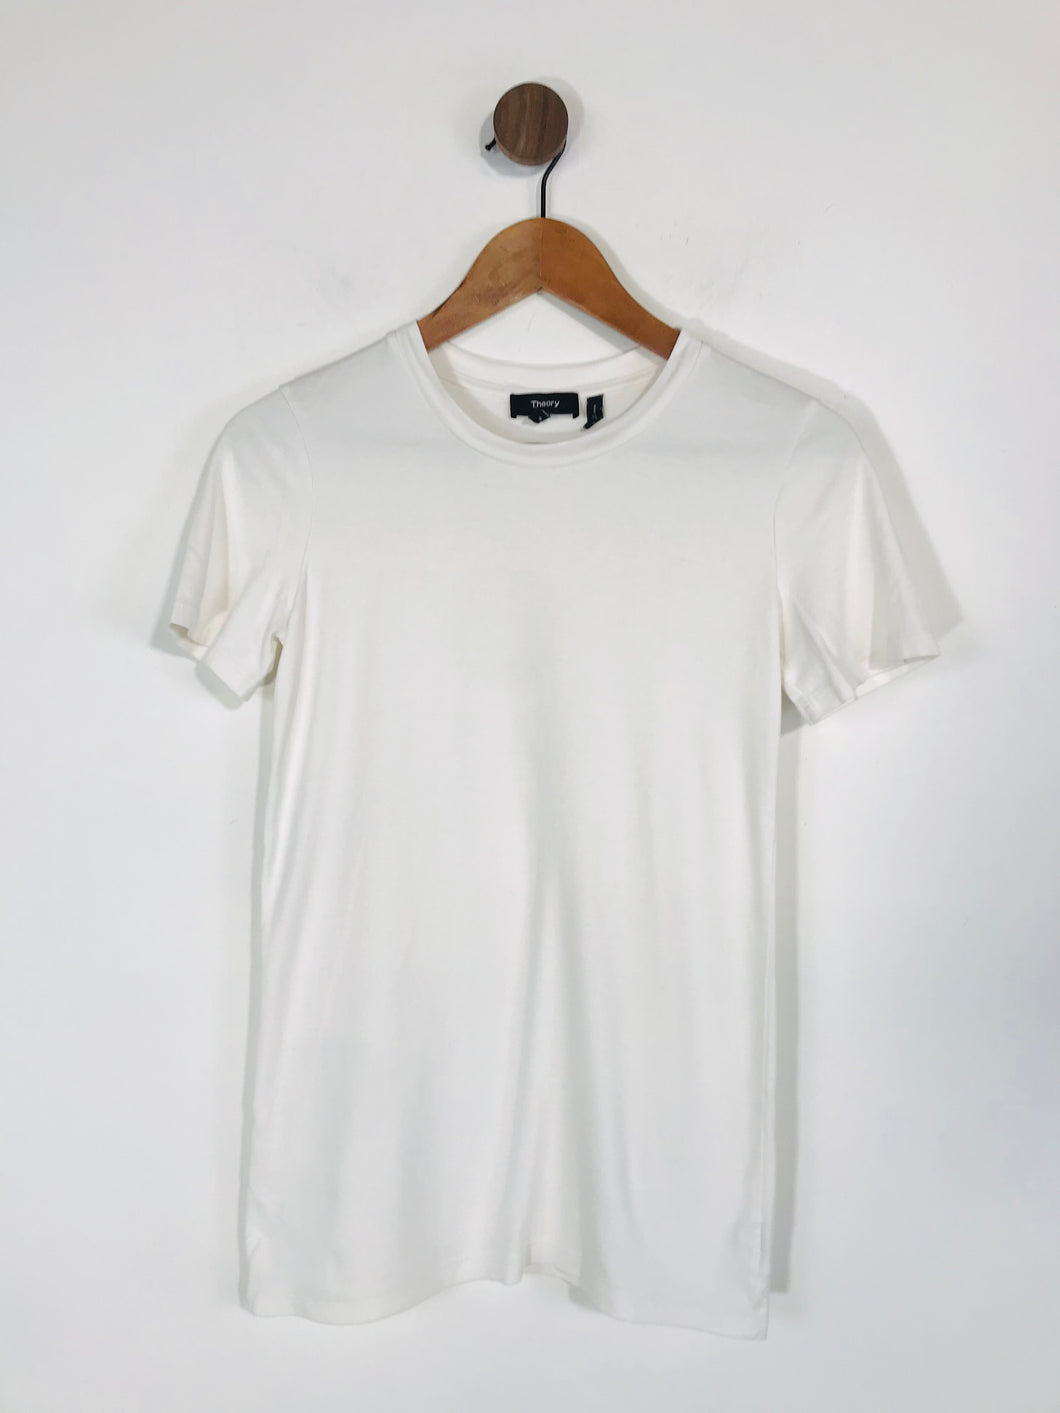 Theory Women's Cotton T-Shirt | S UK8 | White